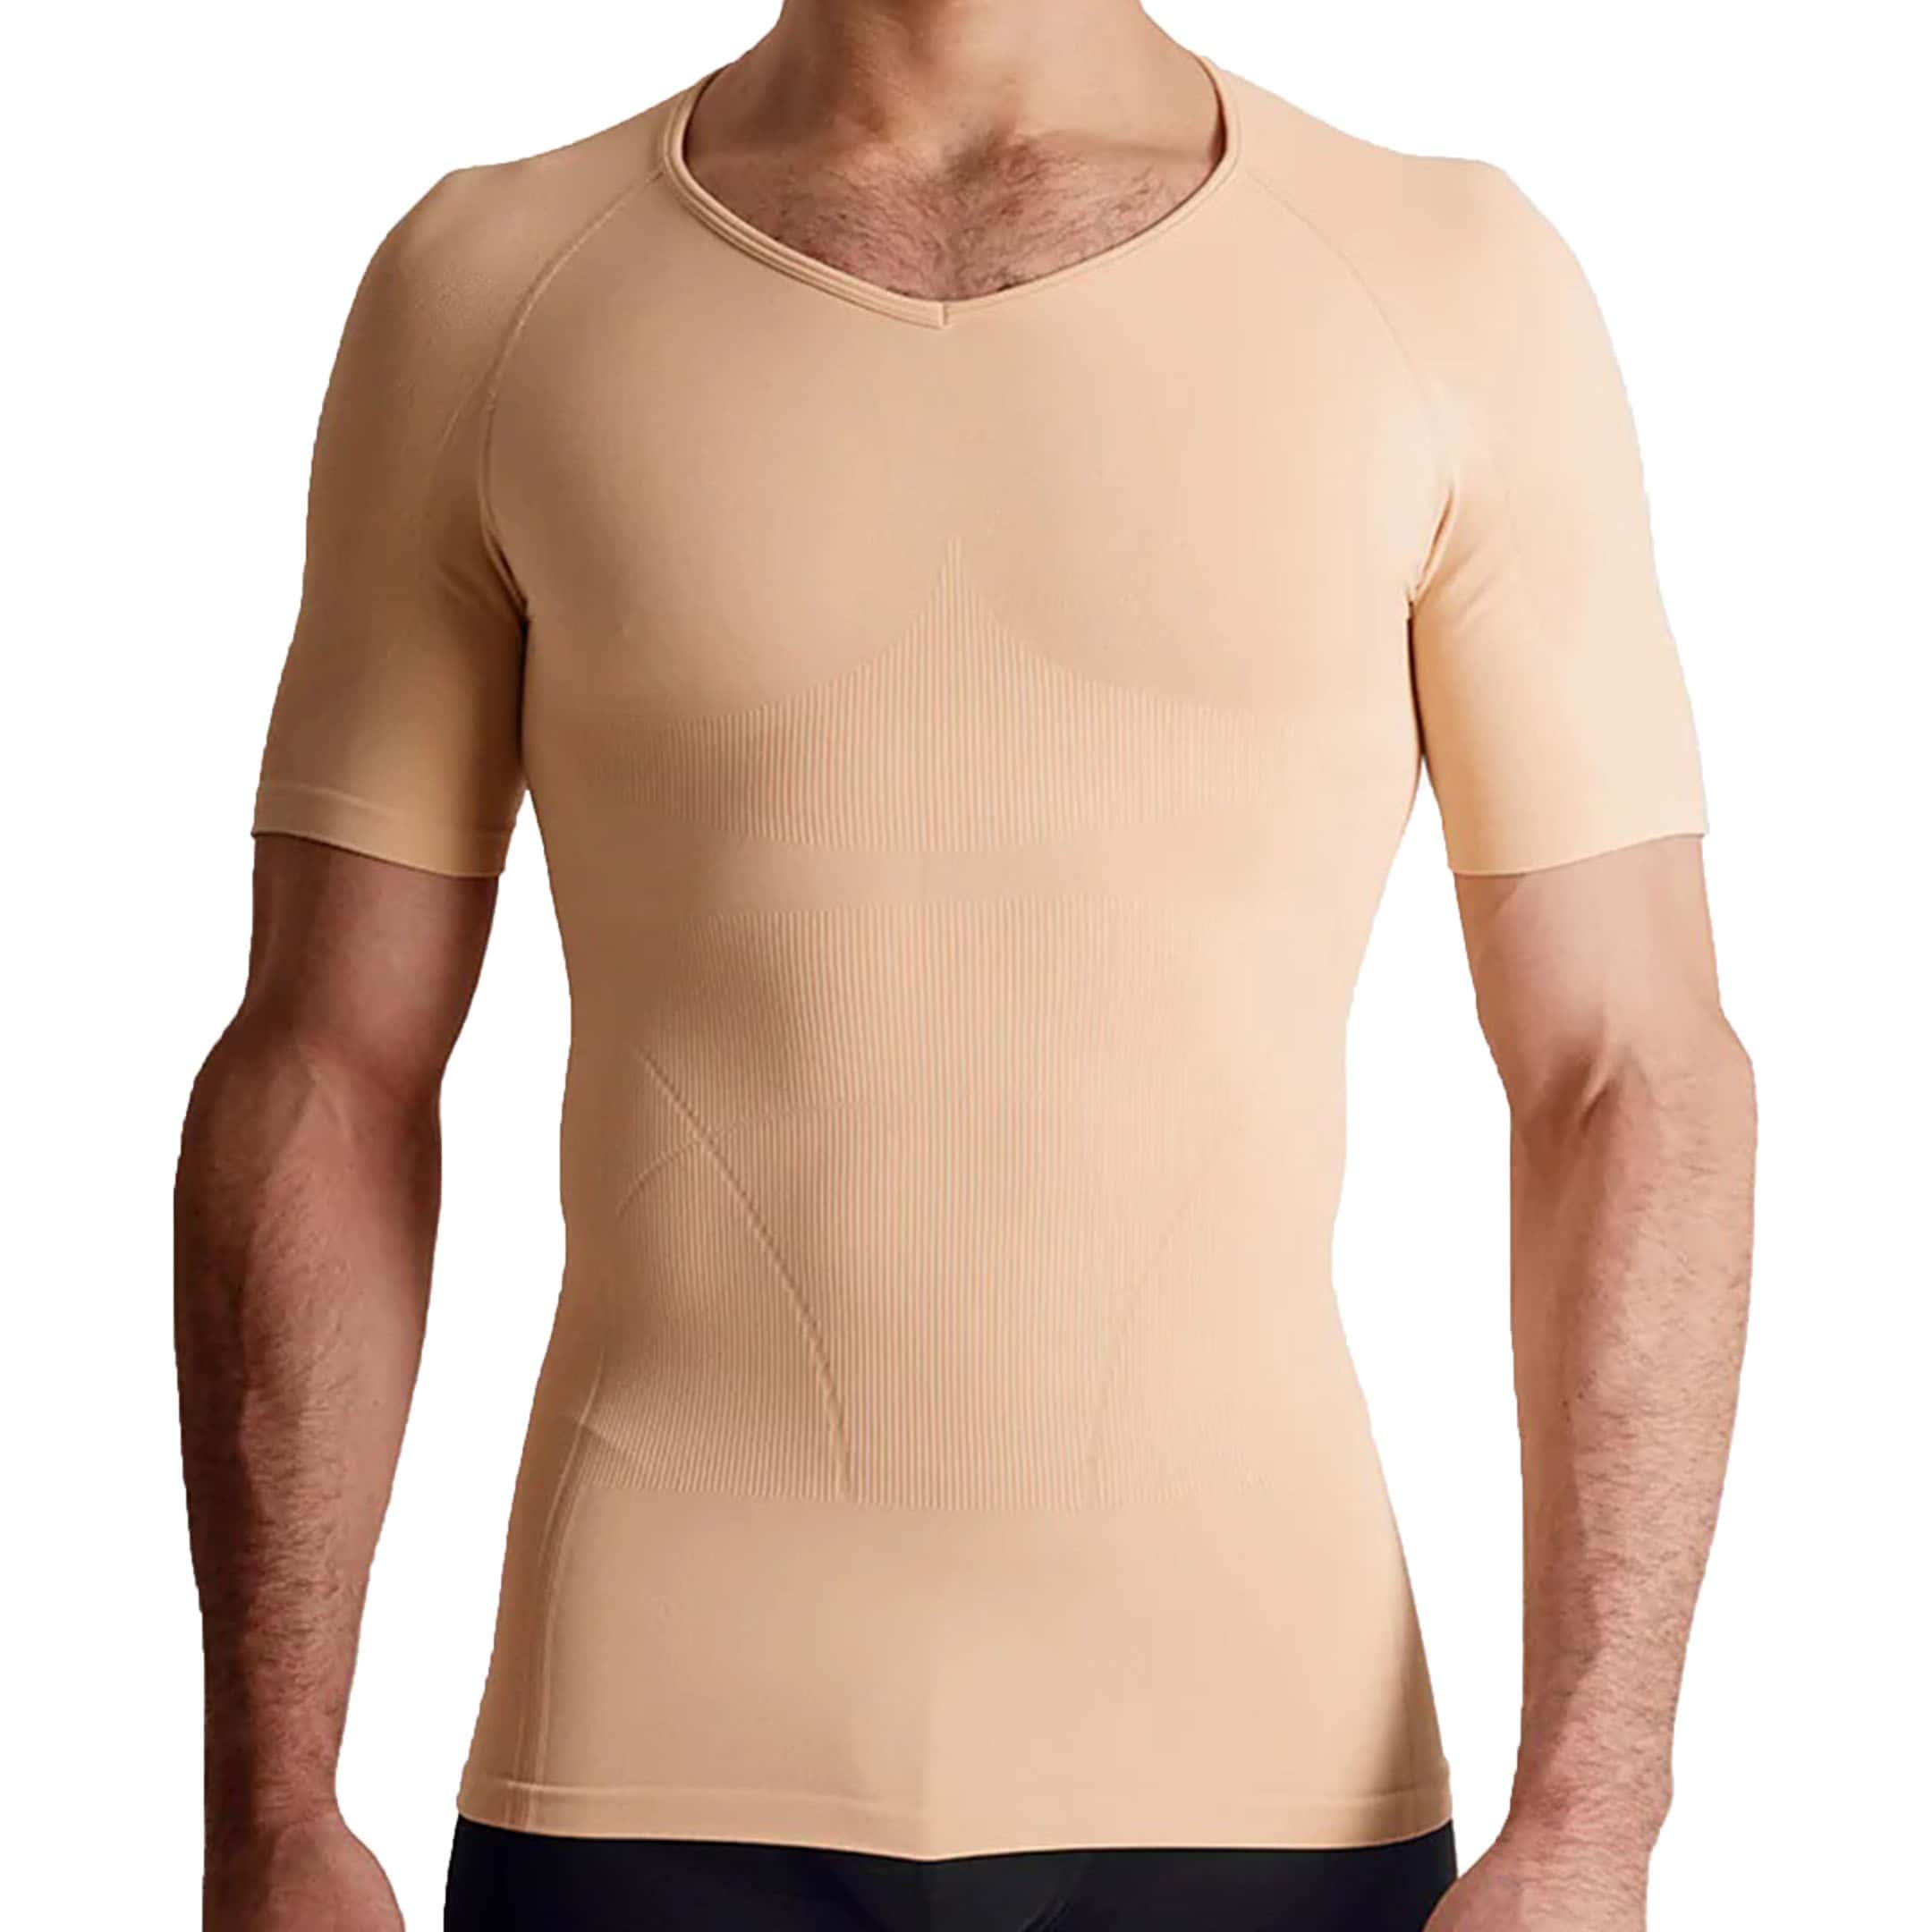 serie sejle Inca Empire Rounderbum Seamless Compression T-Shirt - Nude | INDERWEAR